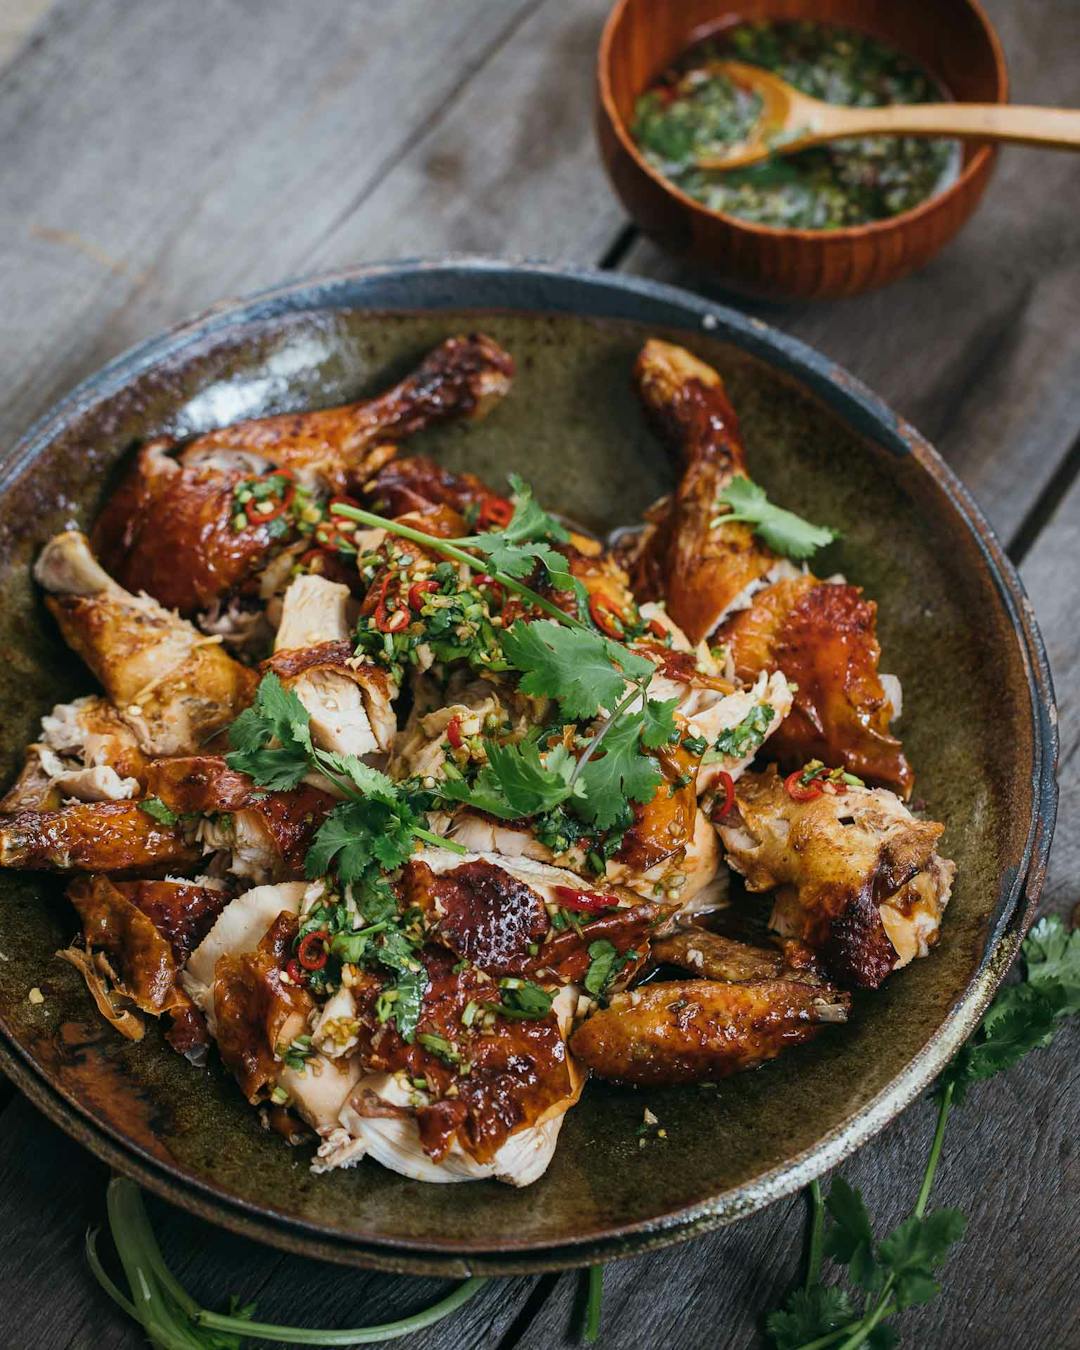 Shandong Roast Chicken